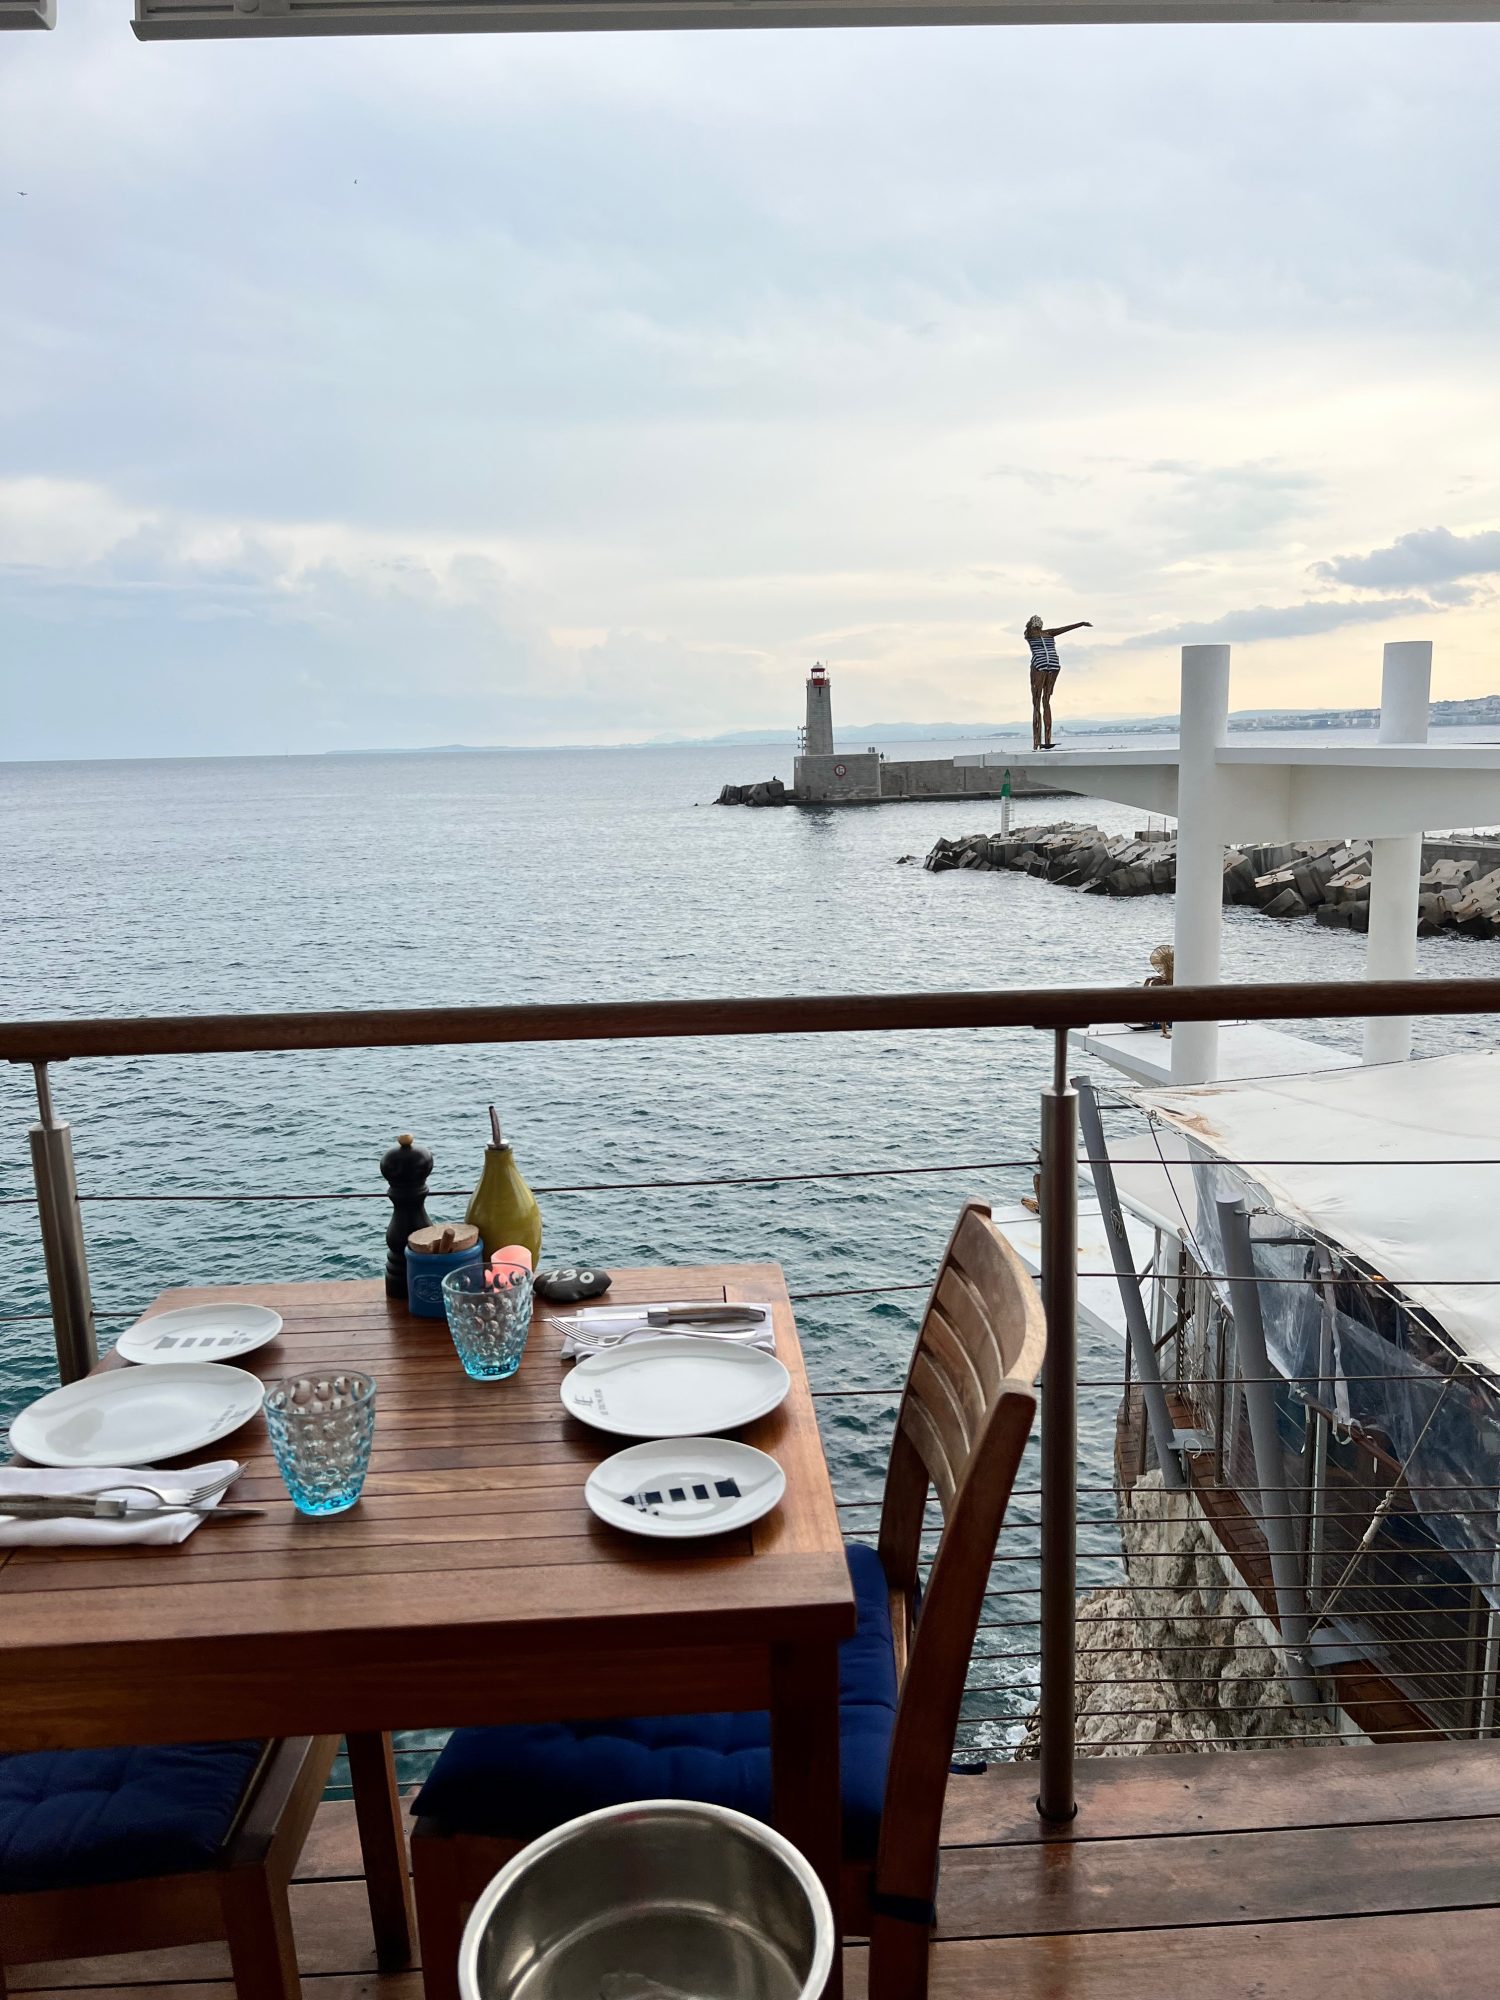 tabletop view of Le Plongeoir overlooking the marina and ocean. 